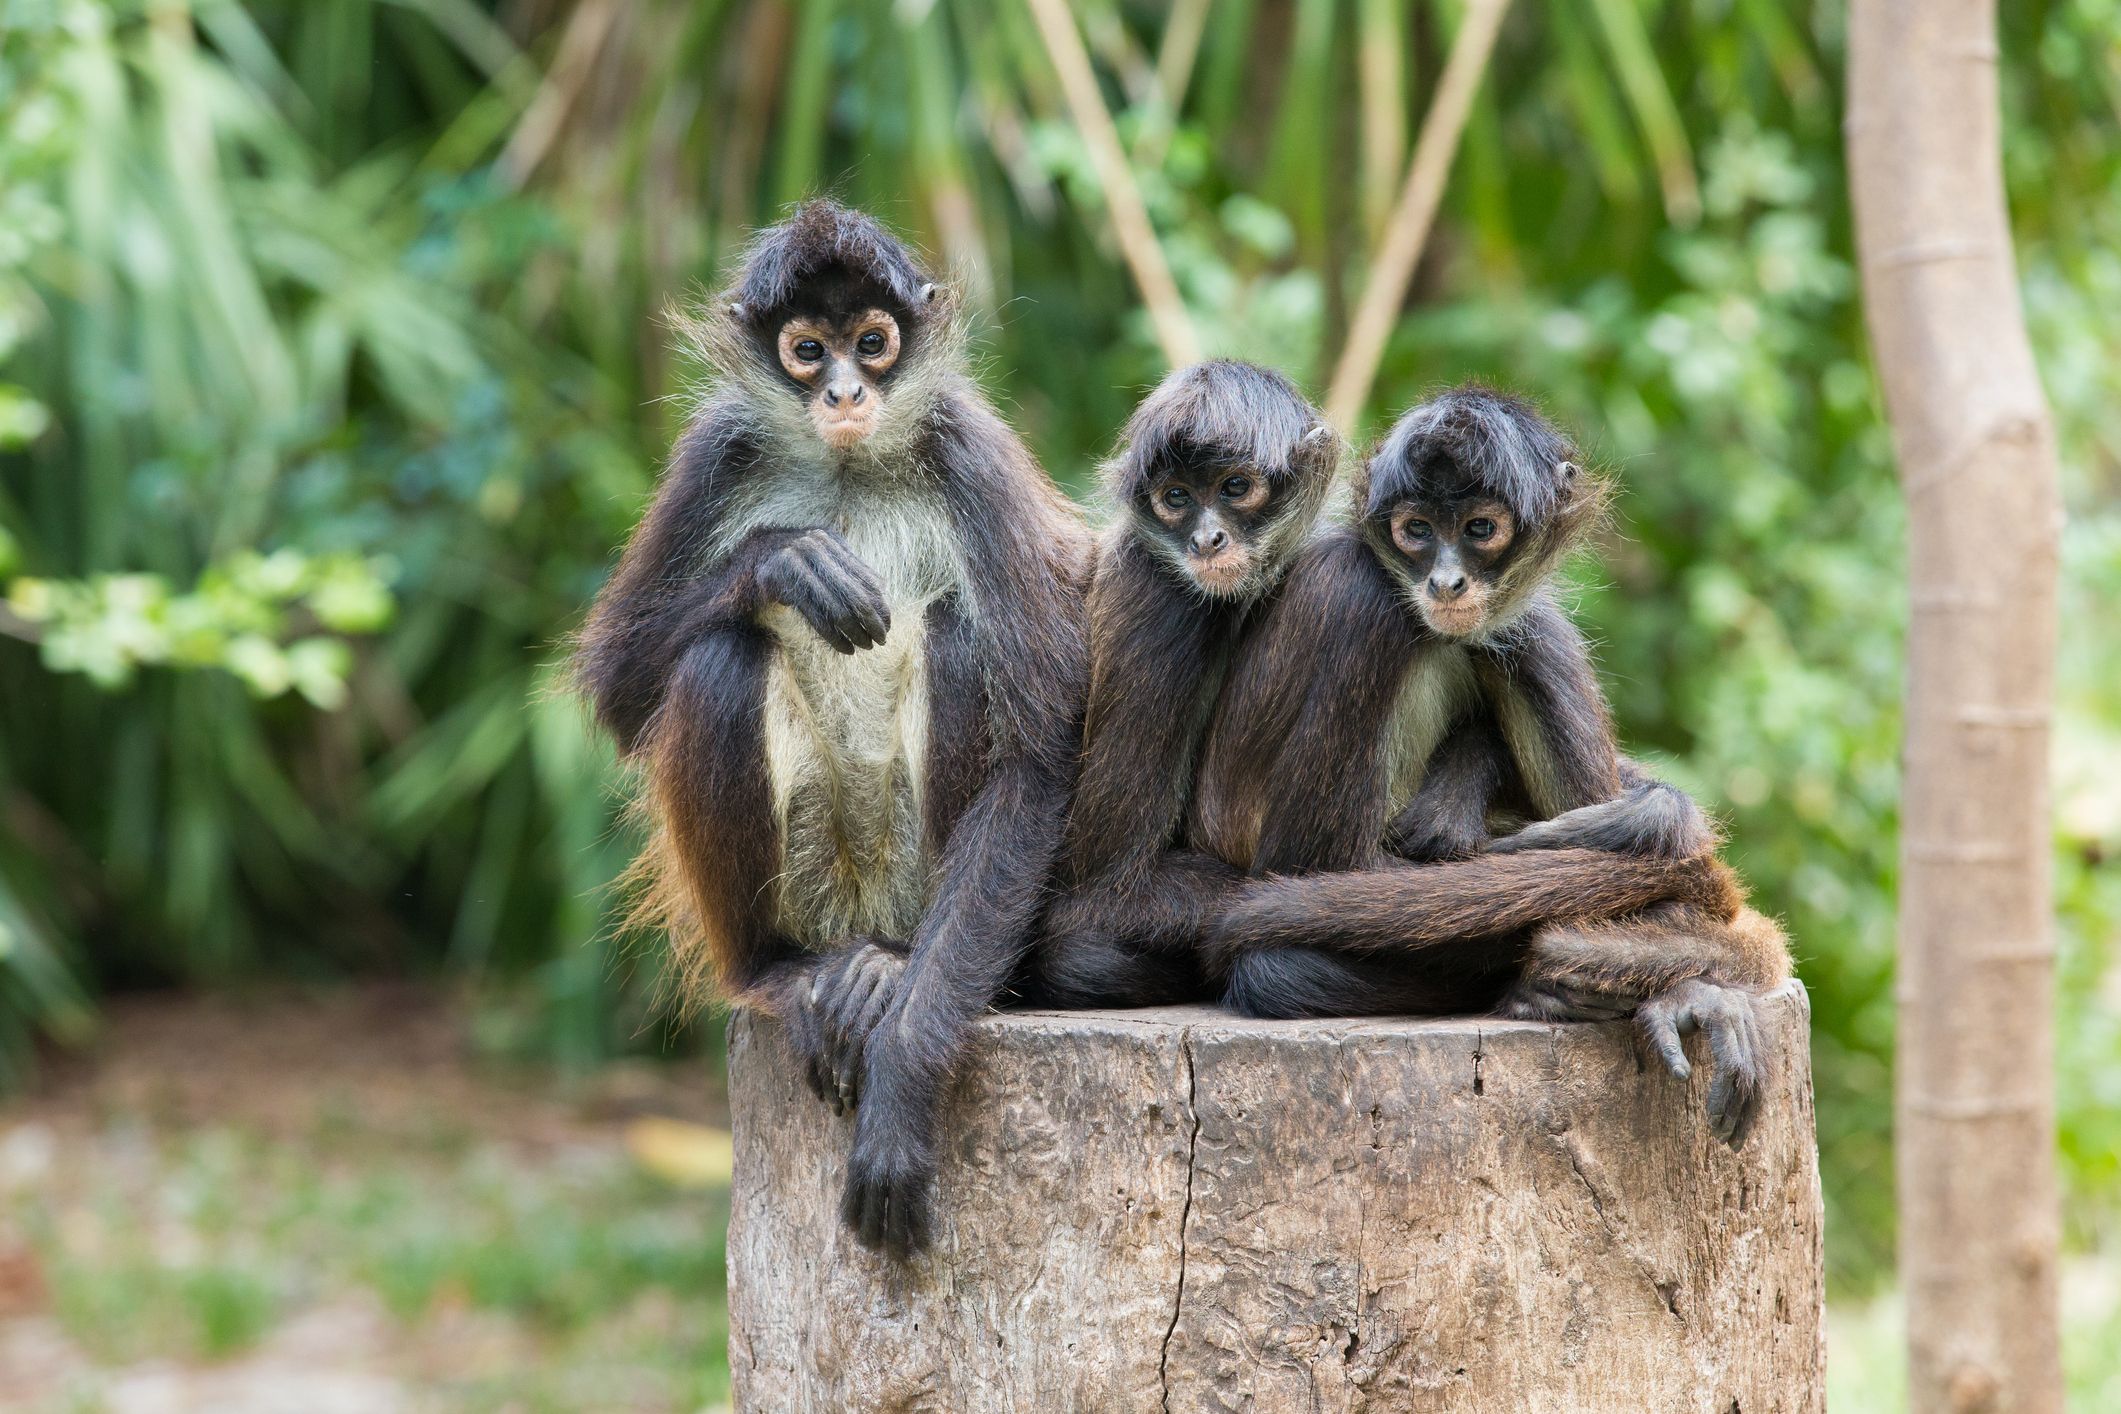 Three monkeys sitting on a log. | Source: Shutterstock